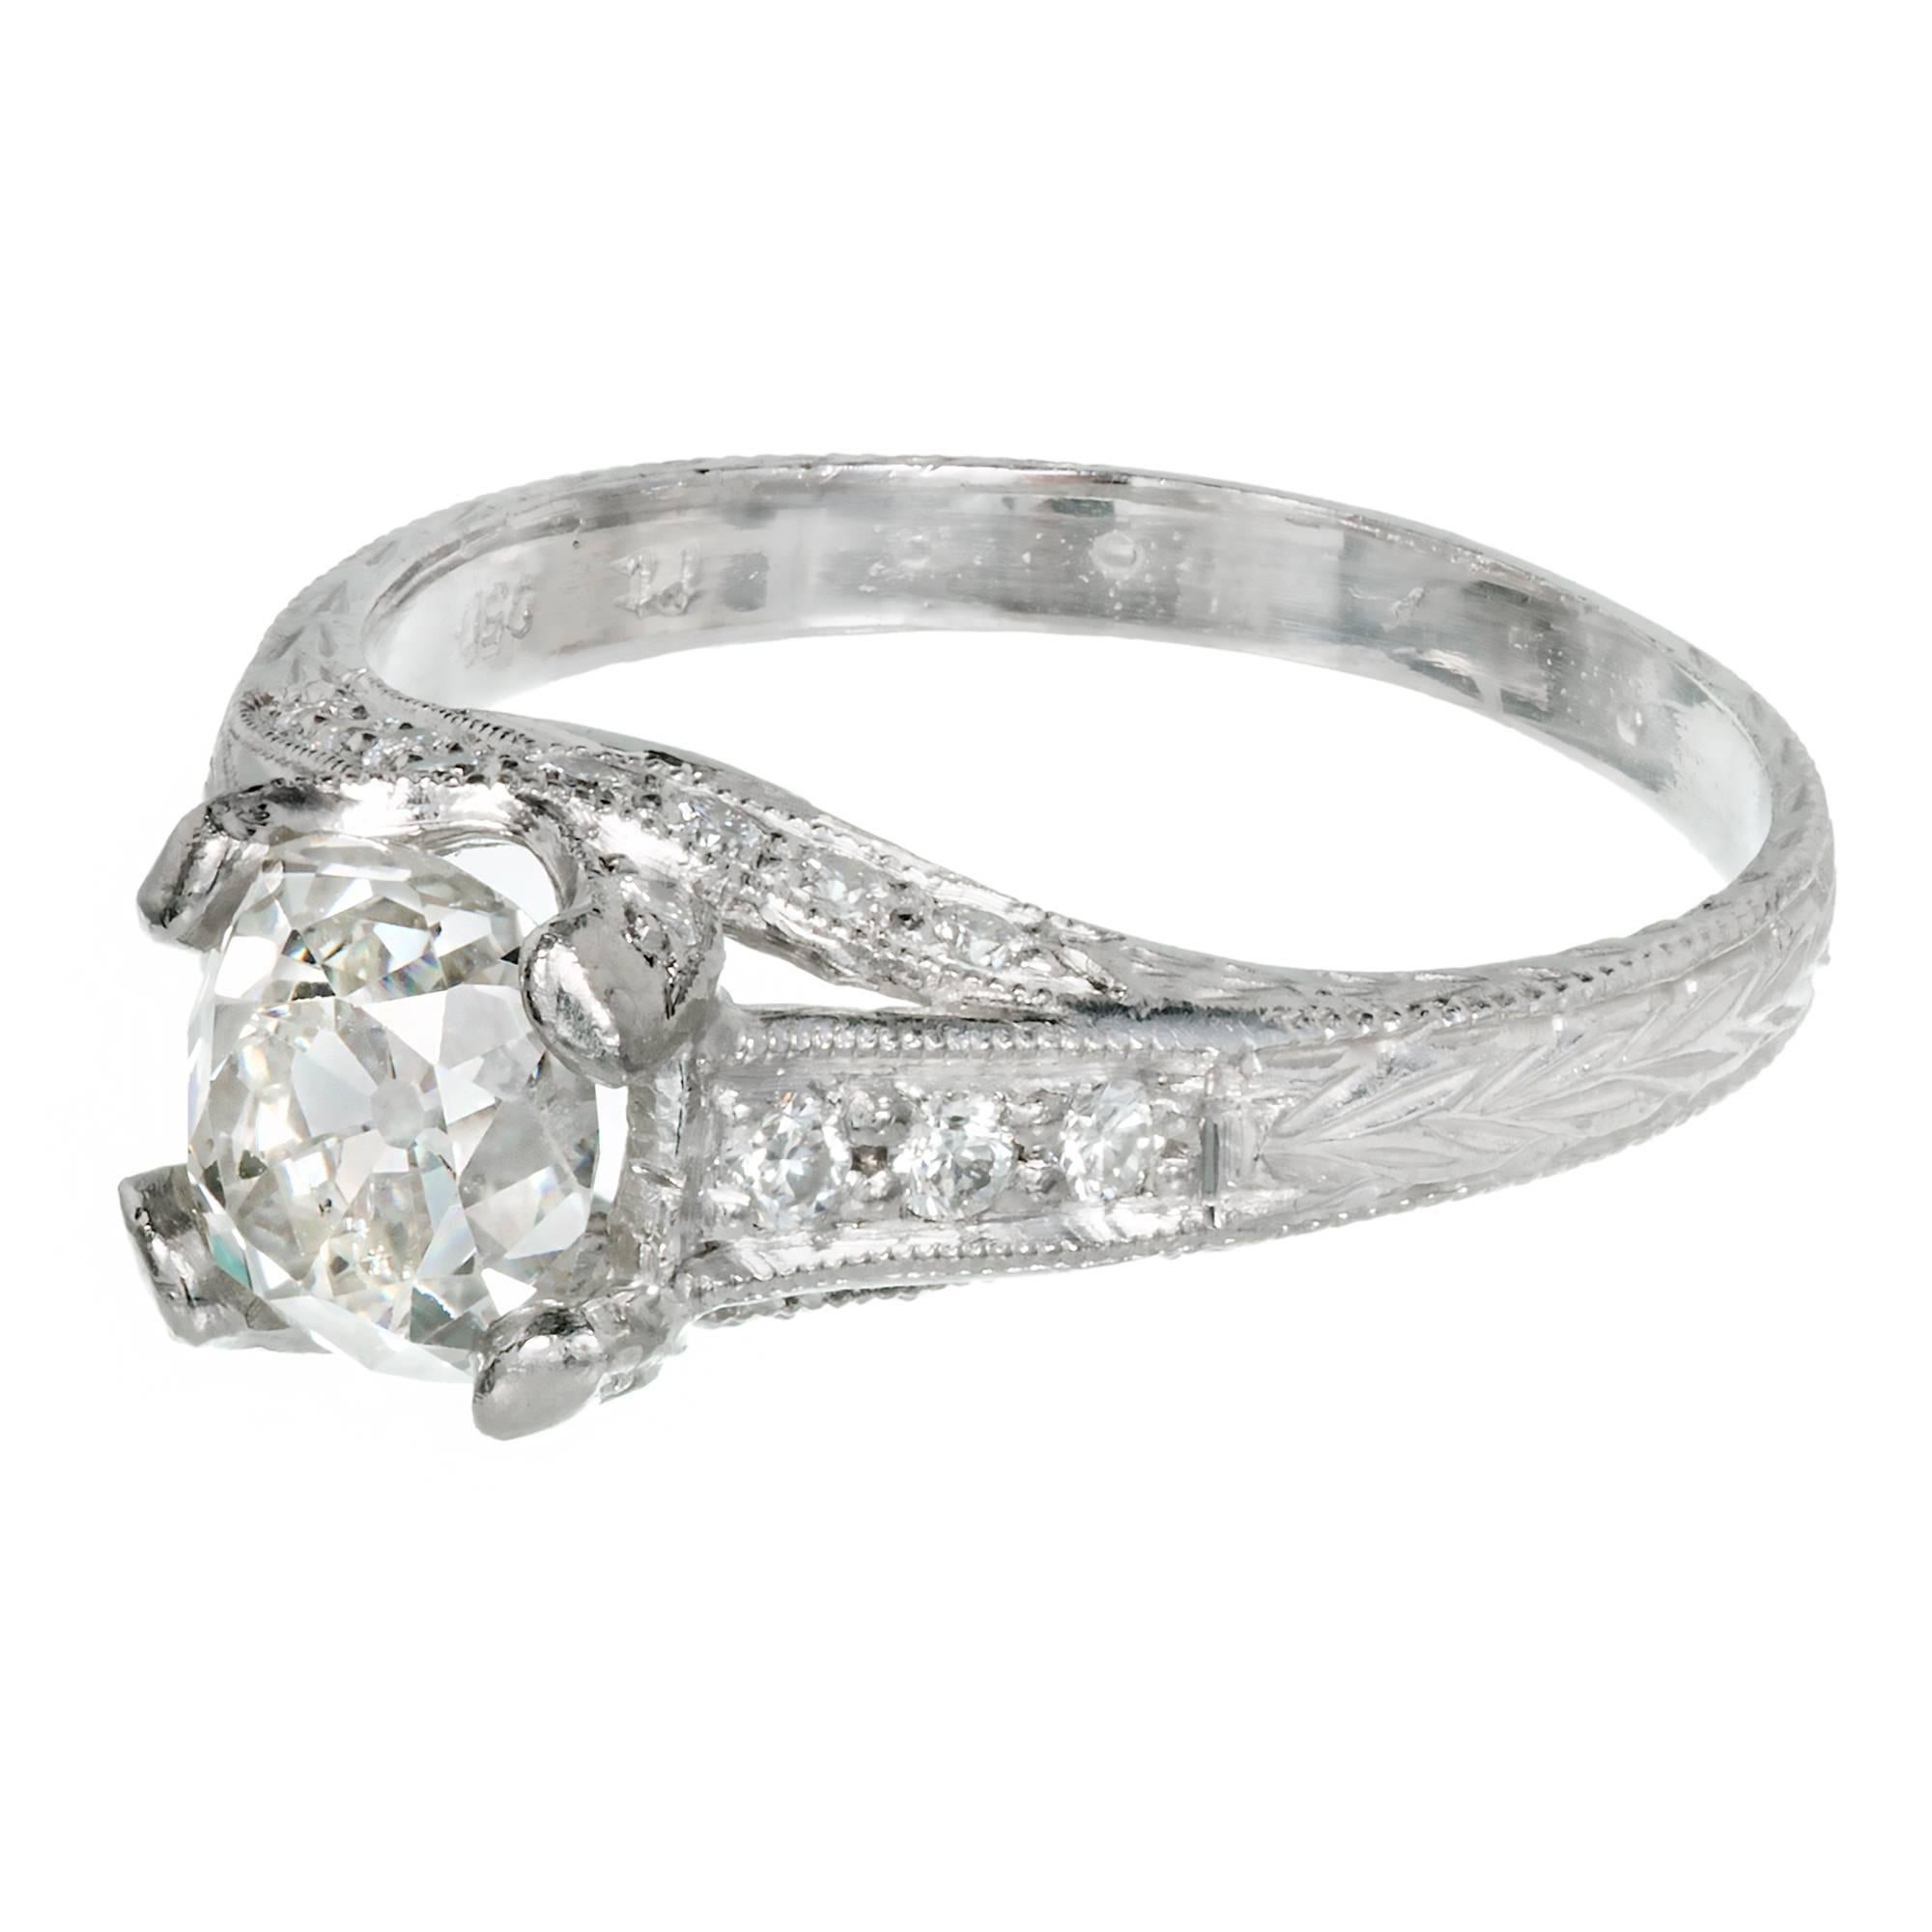 Peter Suchy  1.34 Carat Cushion Cut Diamond Platinum Engagement Ring For Sale 1